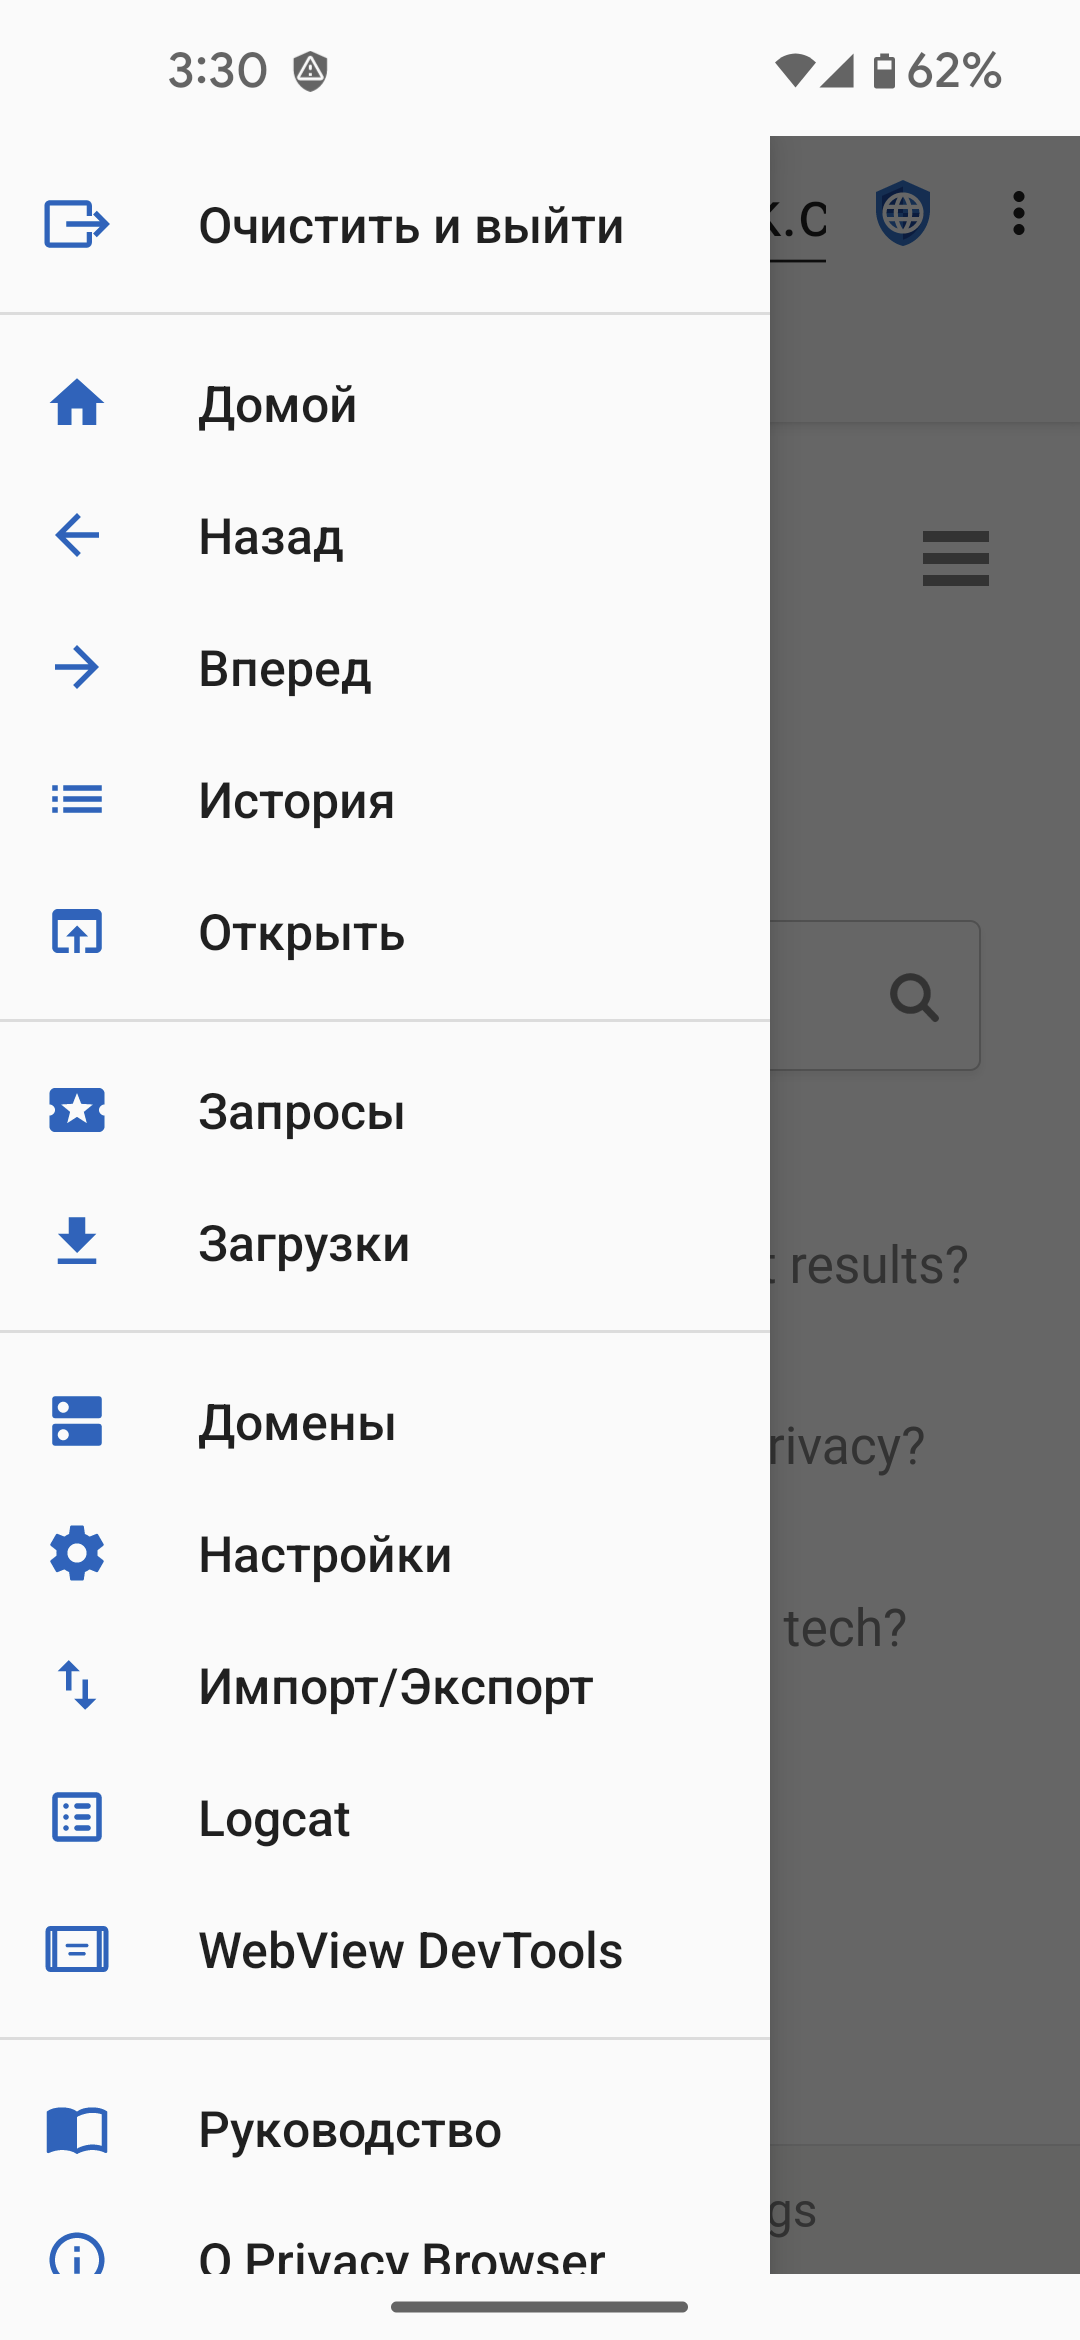 fastlane/metadata/android/ru-RU/images/phoneScreenshots/02-NavigationMenu-ru.png